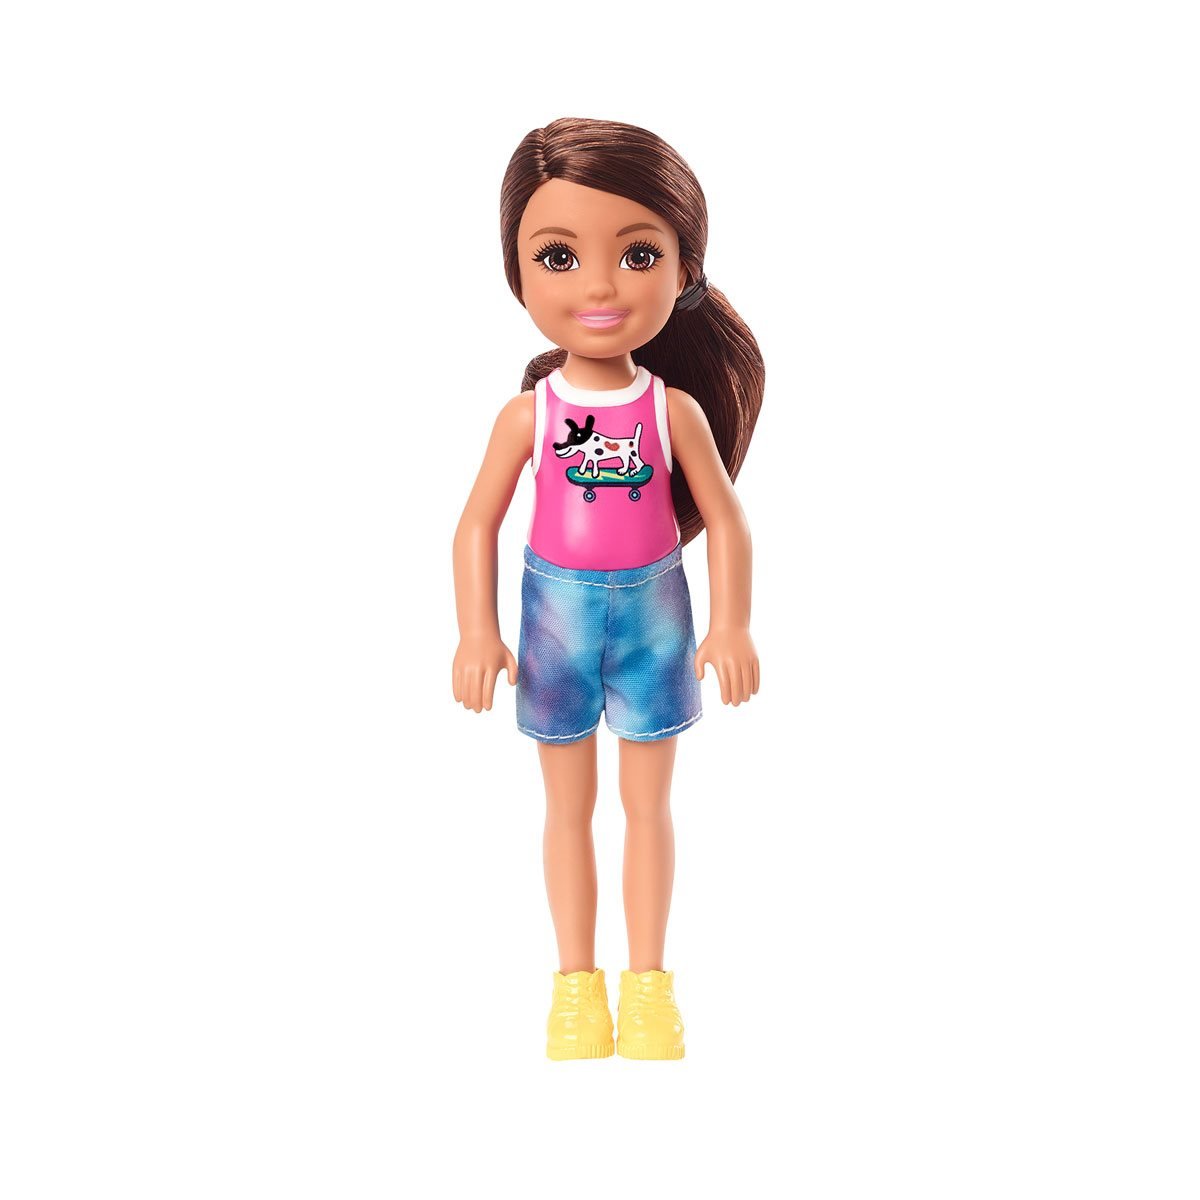 motor Promotie Attent Barbie Tie-Dye Chelsea Doll - Entertainment Earth